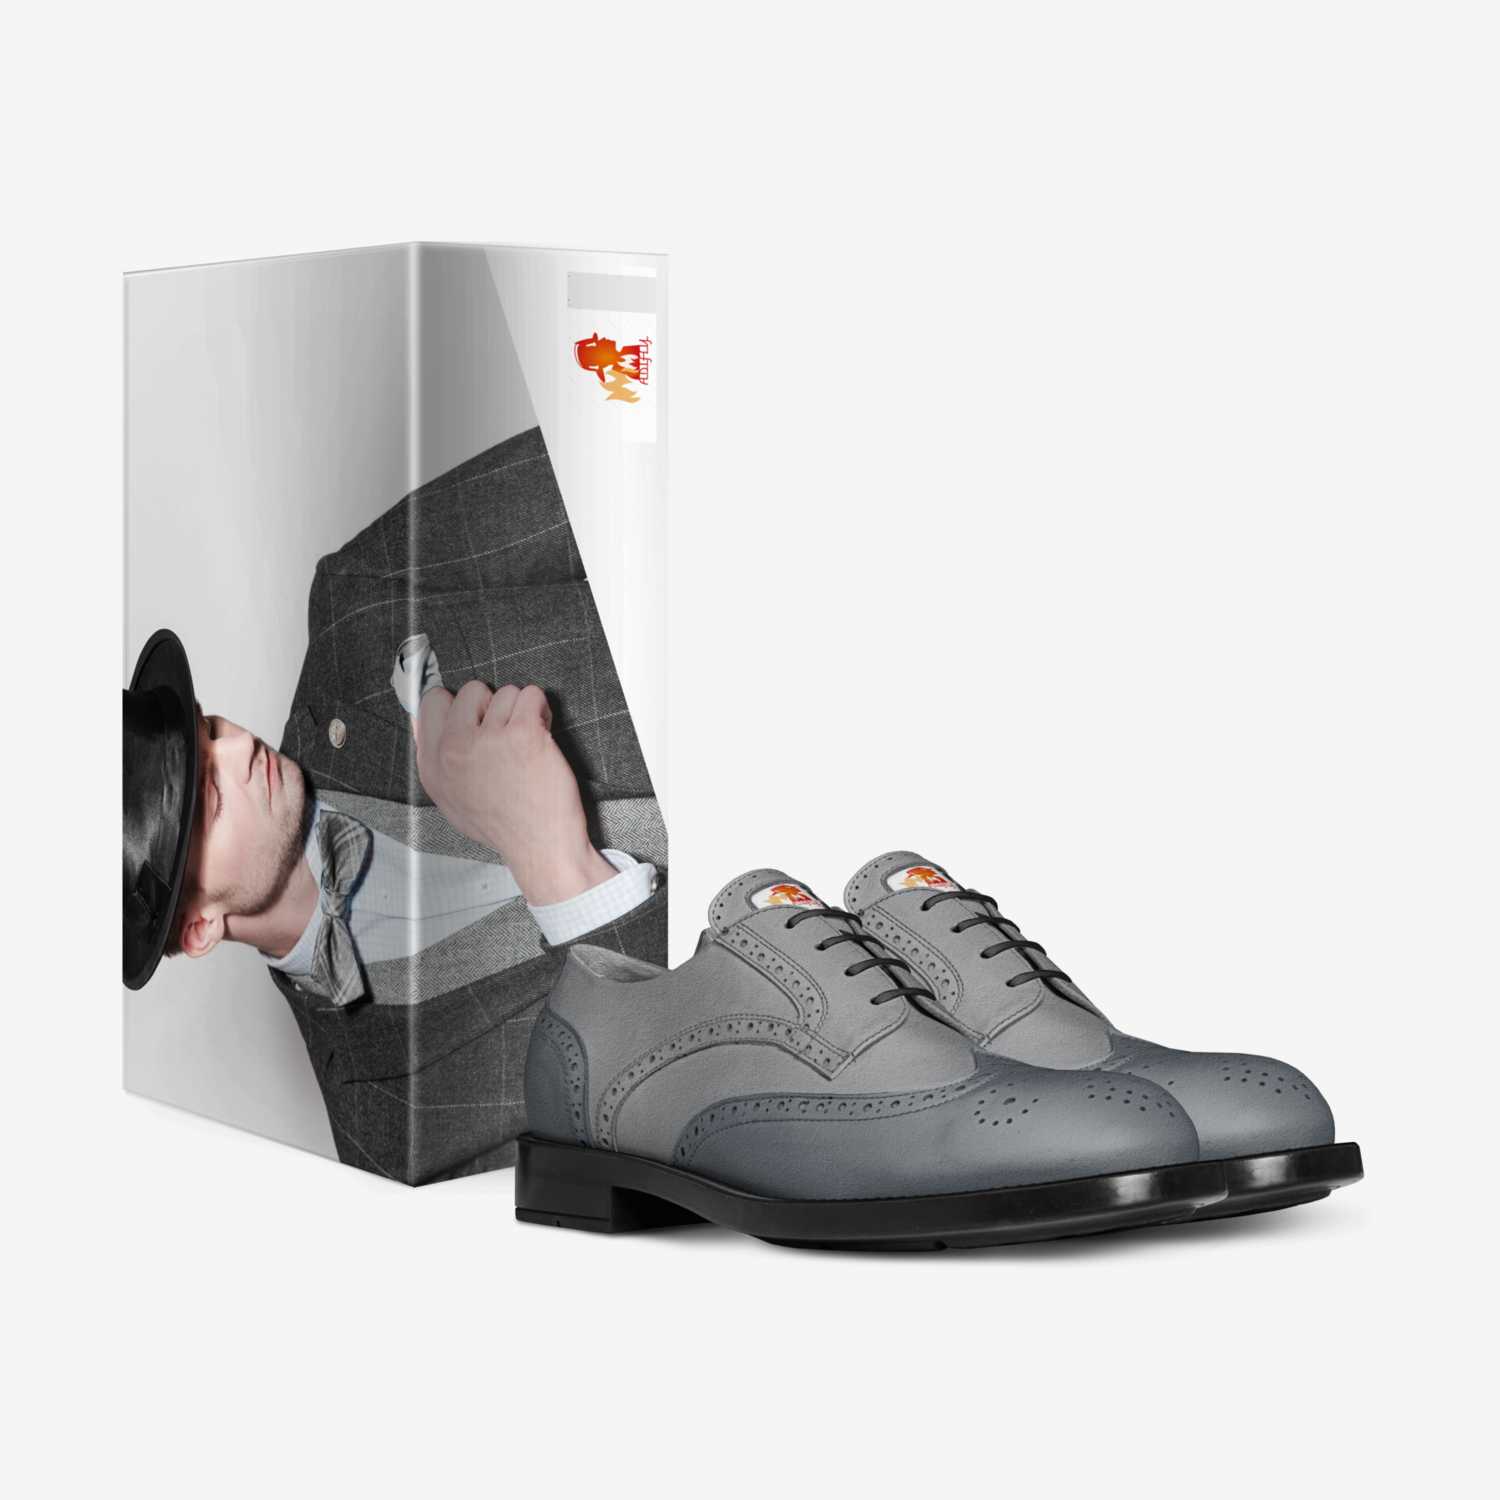 ADIFLY custom made in Italy shoes by Giovani Adiyo | Box view